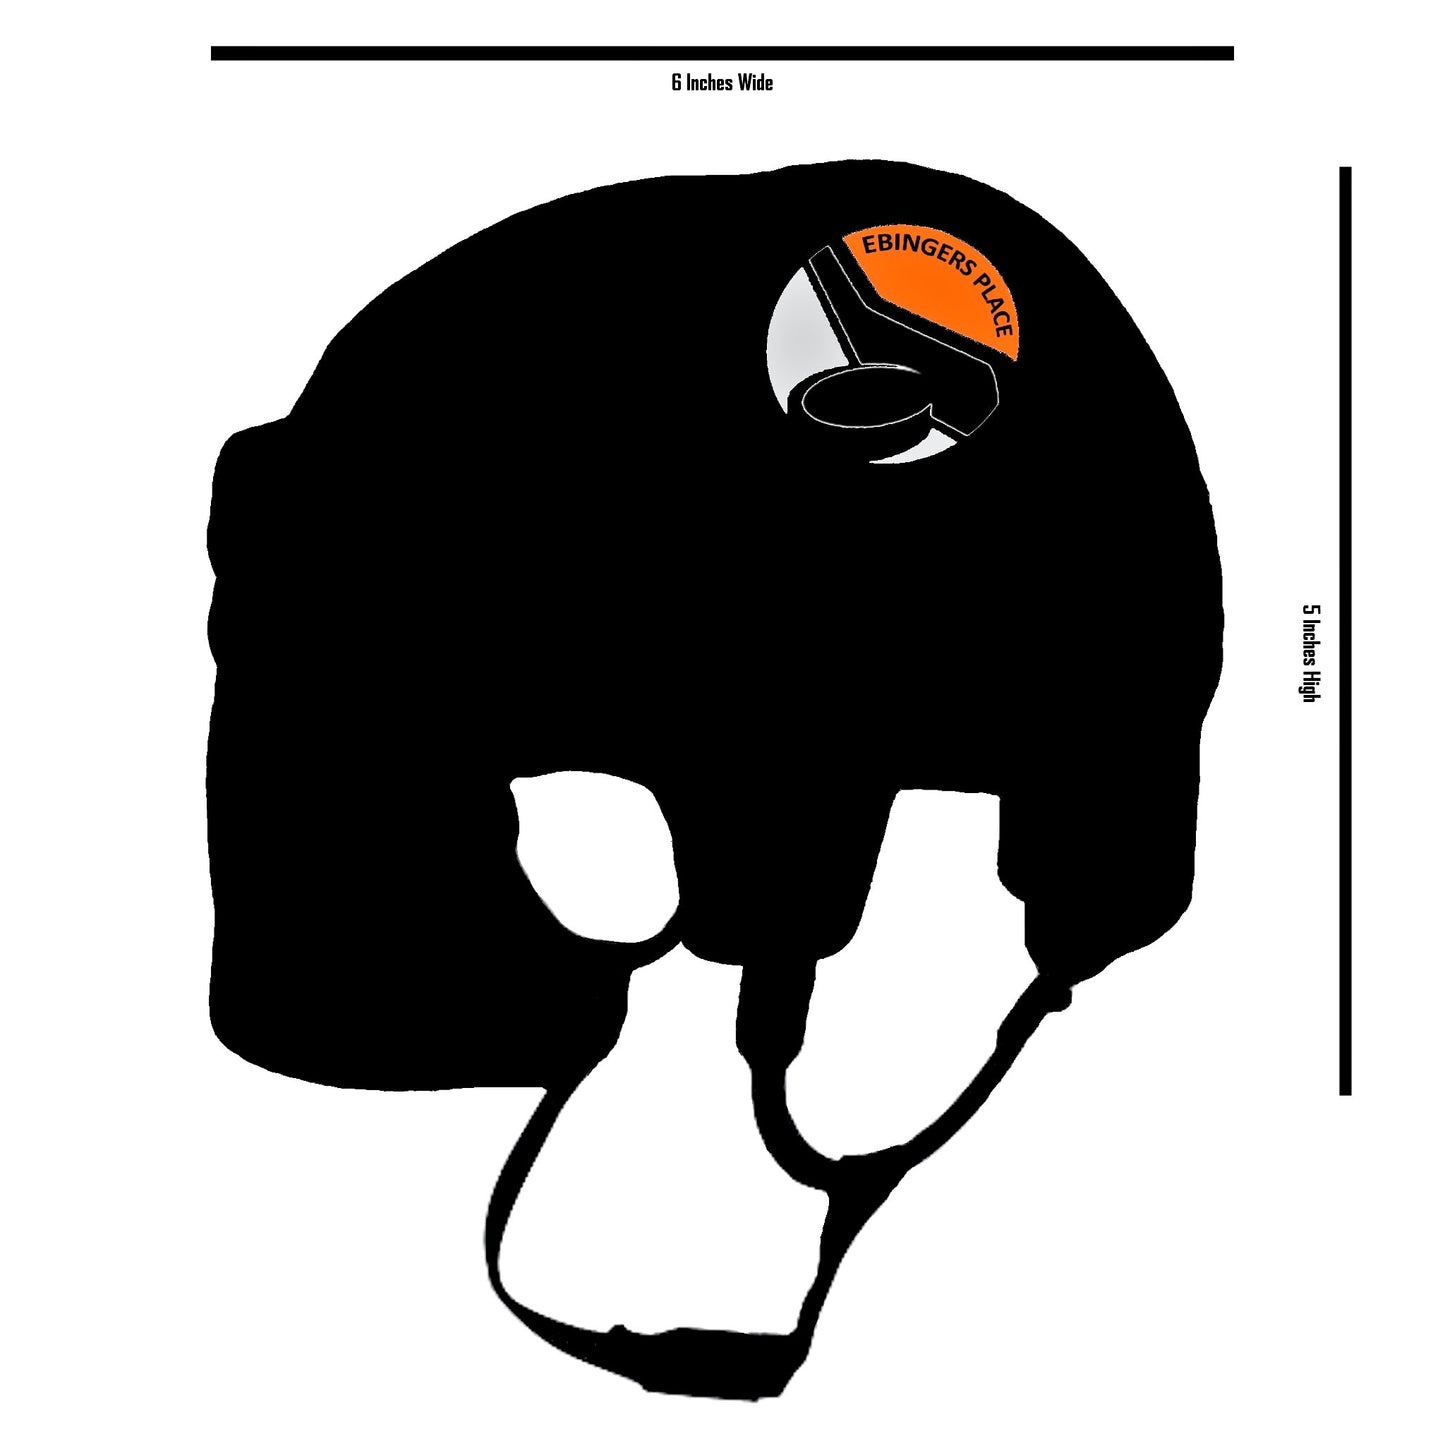 Winnipeg Jets White Unsigned Collectible Mini Hockey Helmet